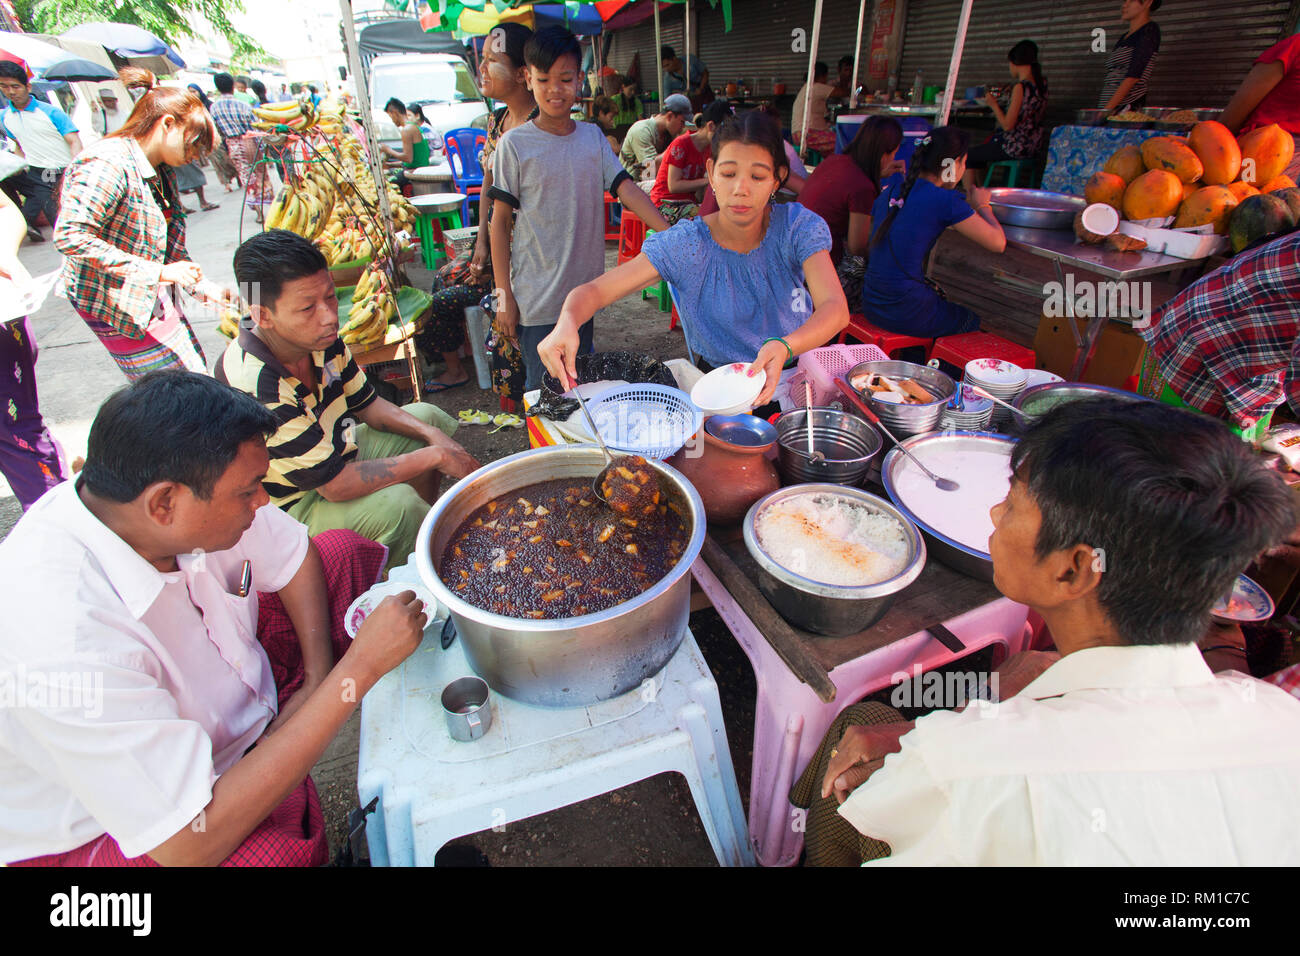 Ambulant restaurant, market in Kon Zay Tan street, Sule Pagoda area, city center, Yangon, Myanmar, Asia Stock Photo